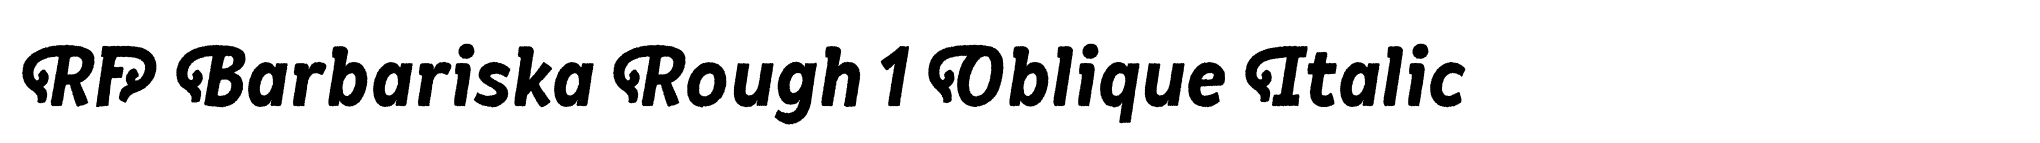 RF Barbariska Rough 1 Oblique Italic image